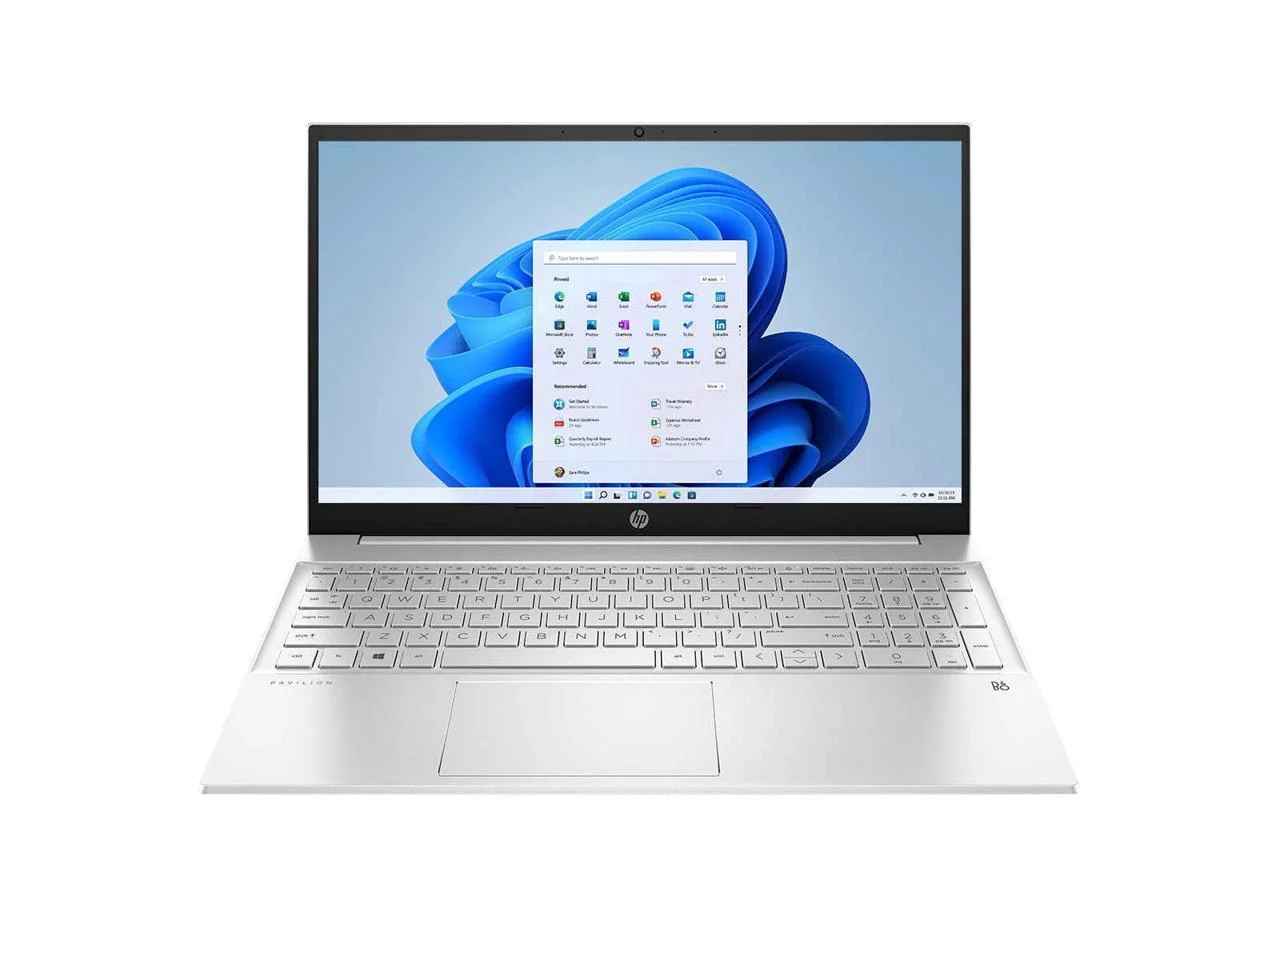 OmniBook 5700 - Notebook PC